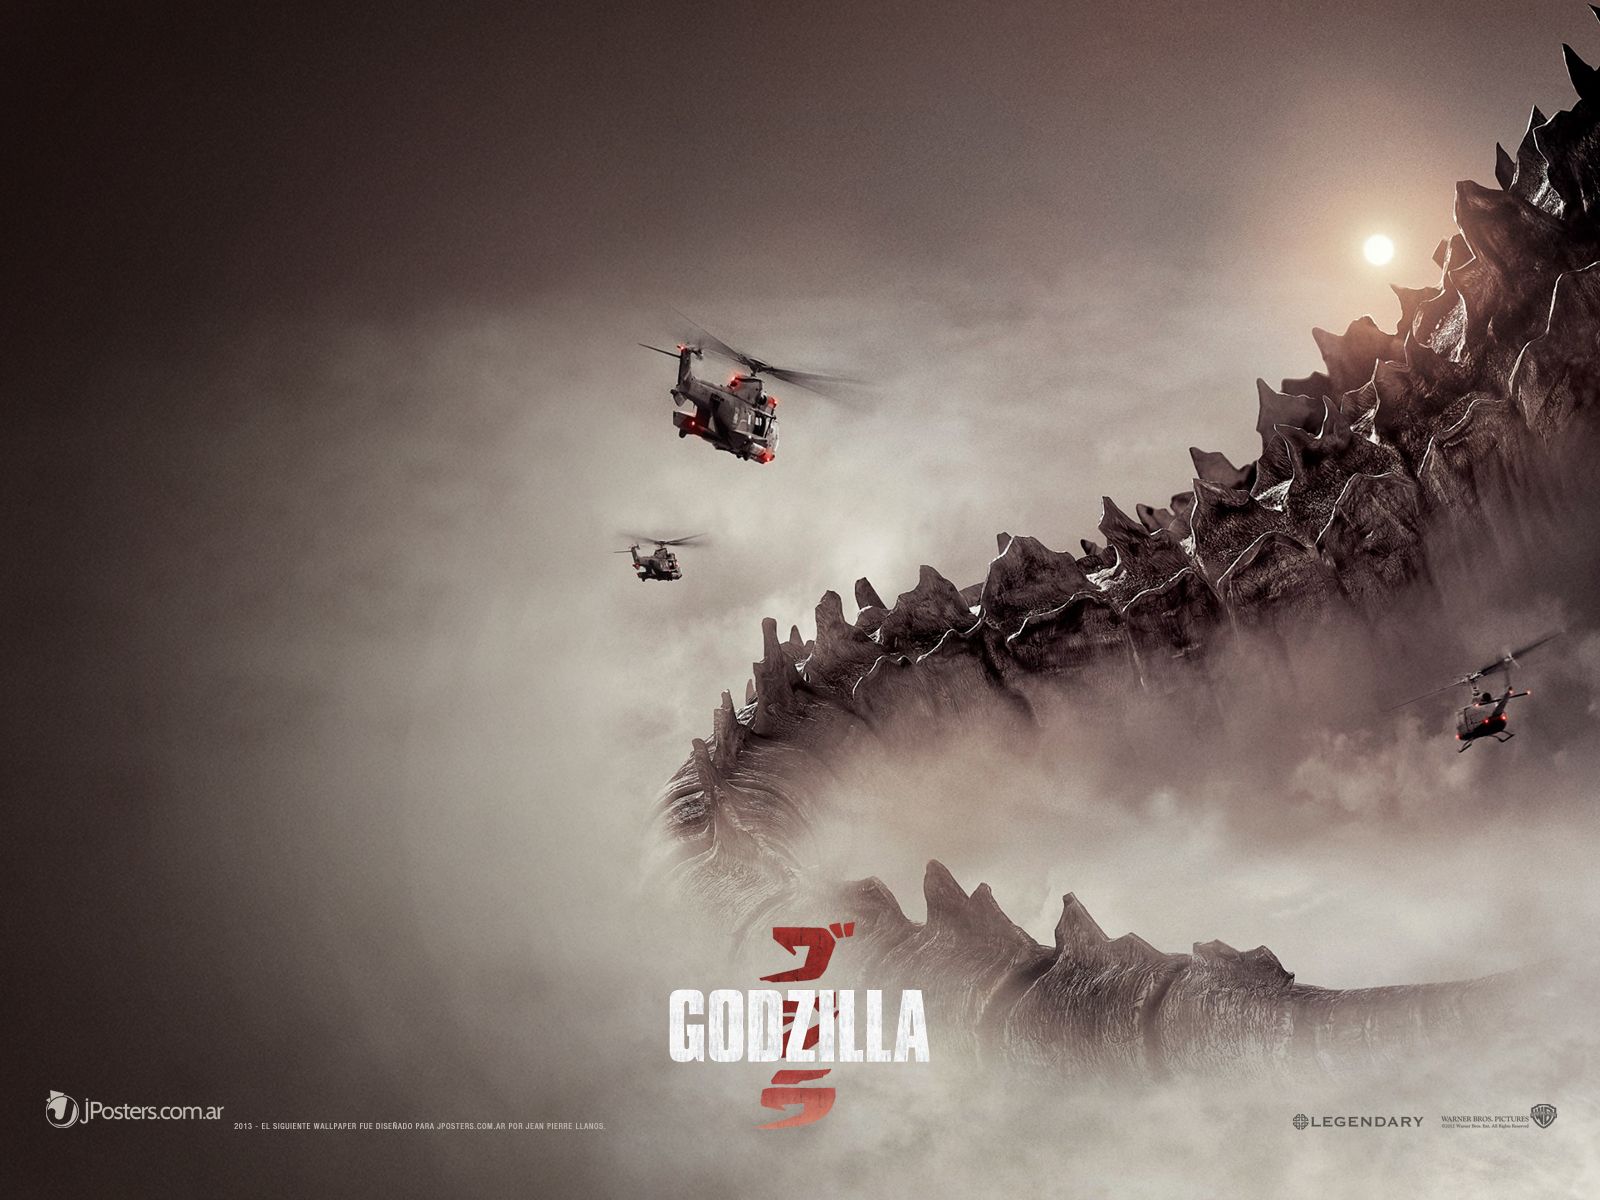 Godzilla 2014 Wallpaper 2014 Posters Image Gallery